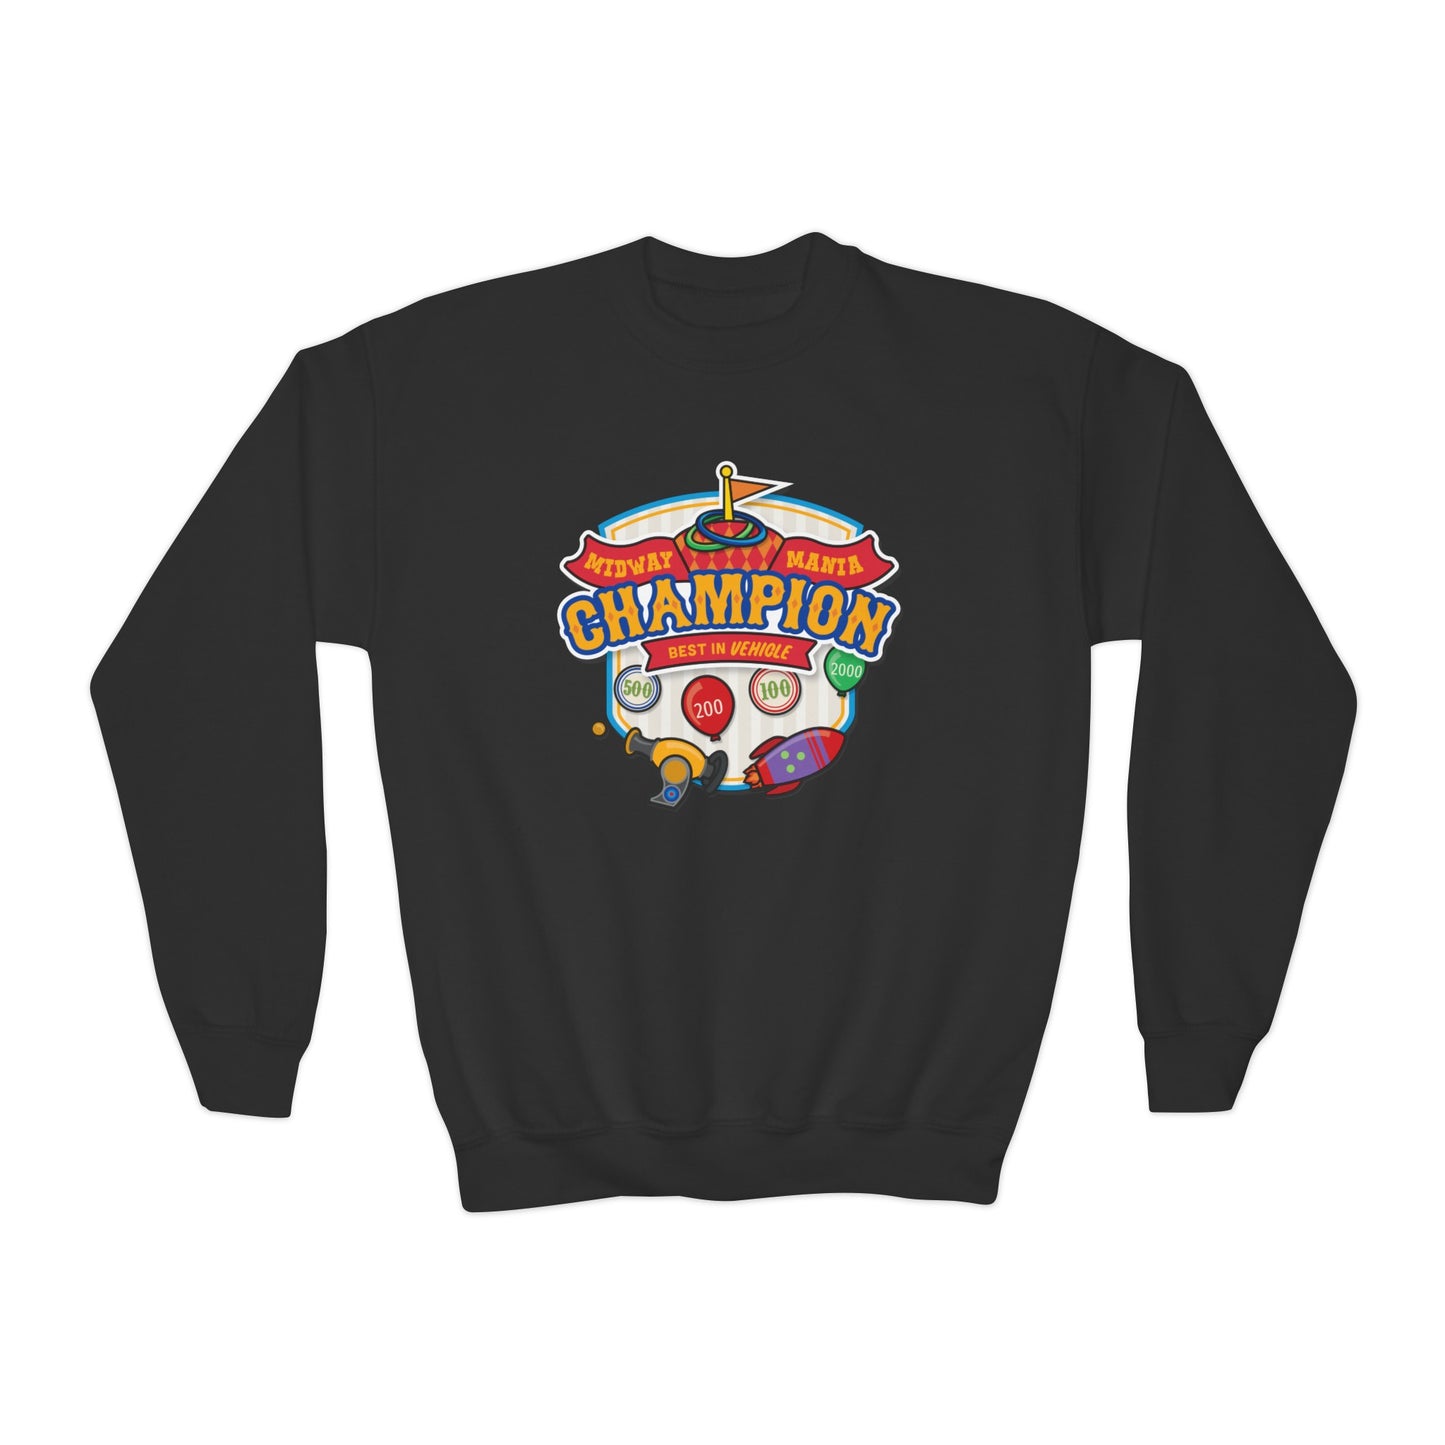 Midway Mania Champion - Youth Crewneck Sweatshirt